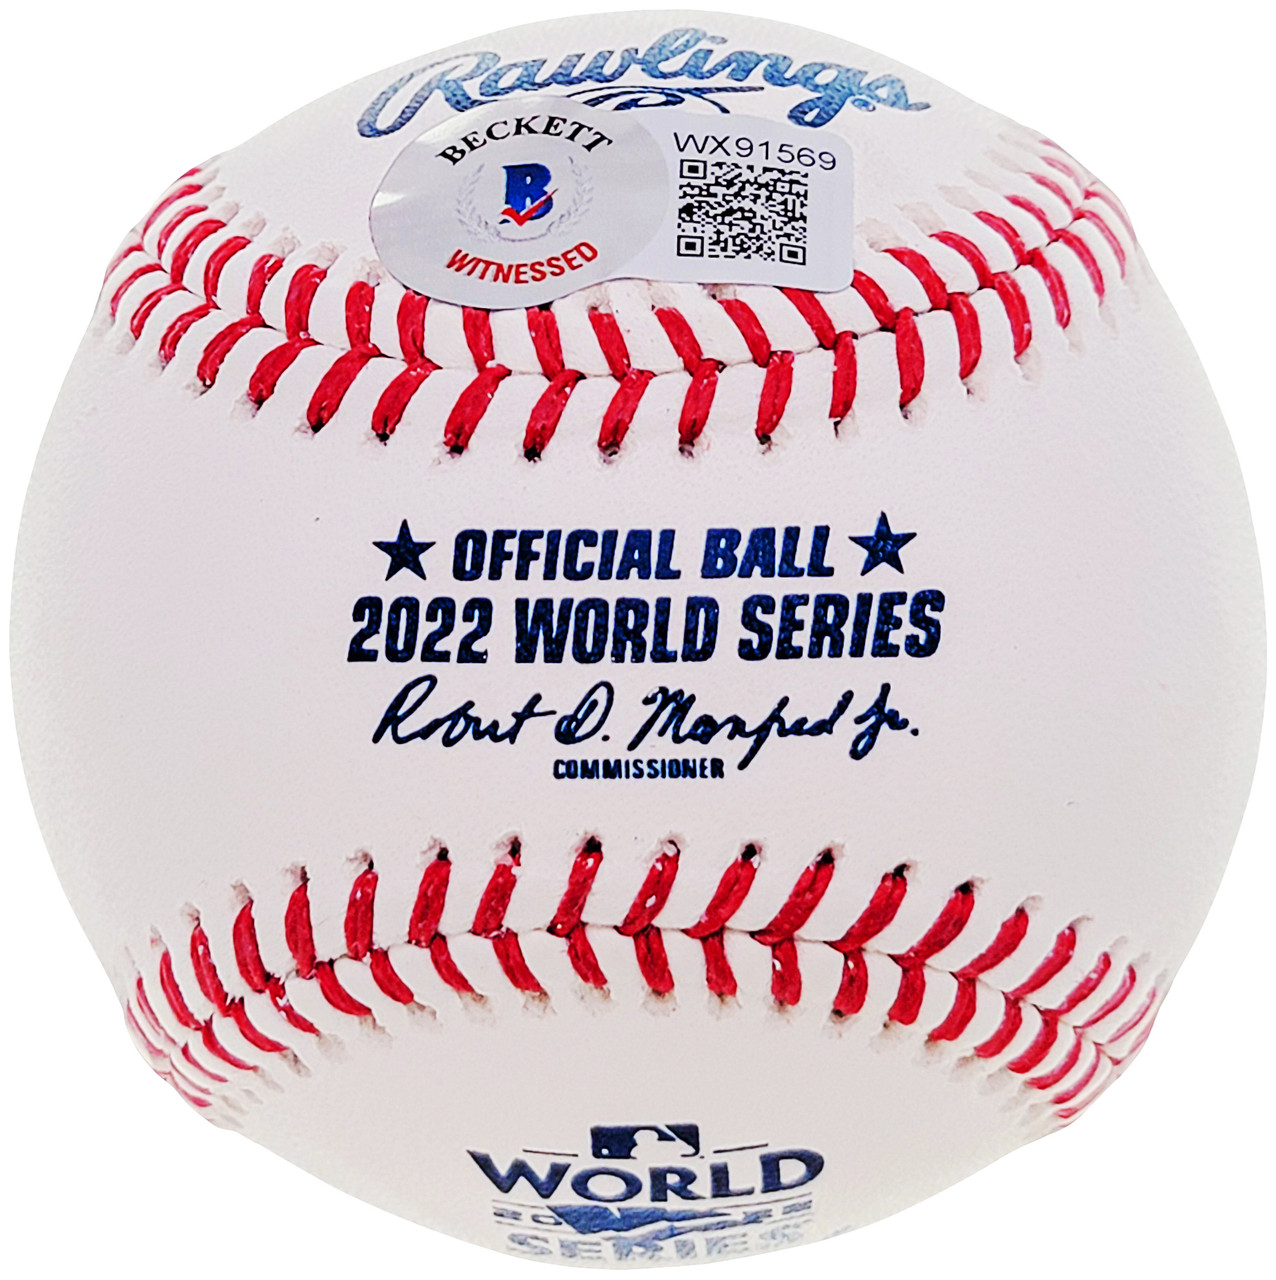 Yordan Alvarez Autographed Houston Custom Baseball Jersey - BAS at